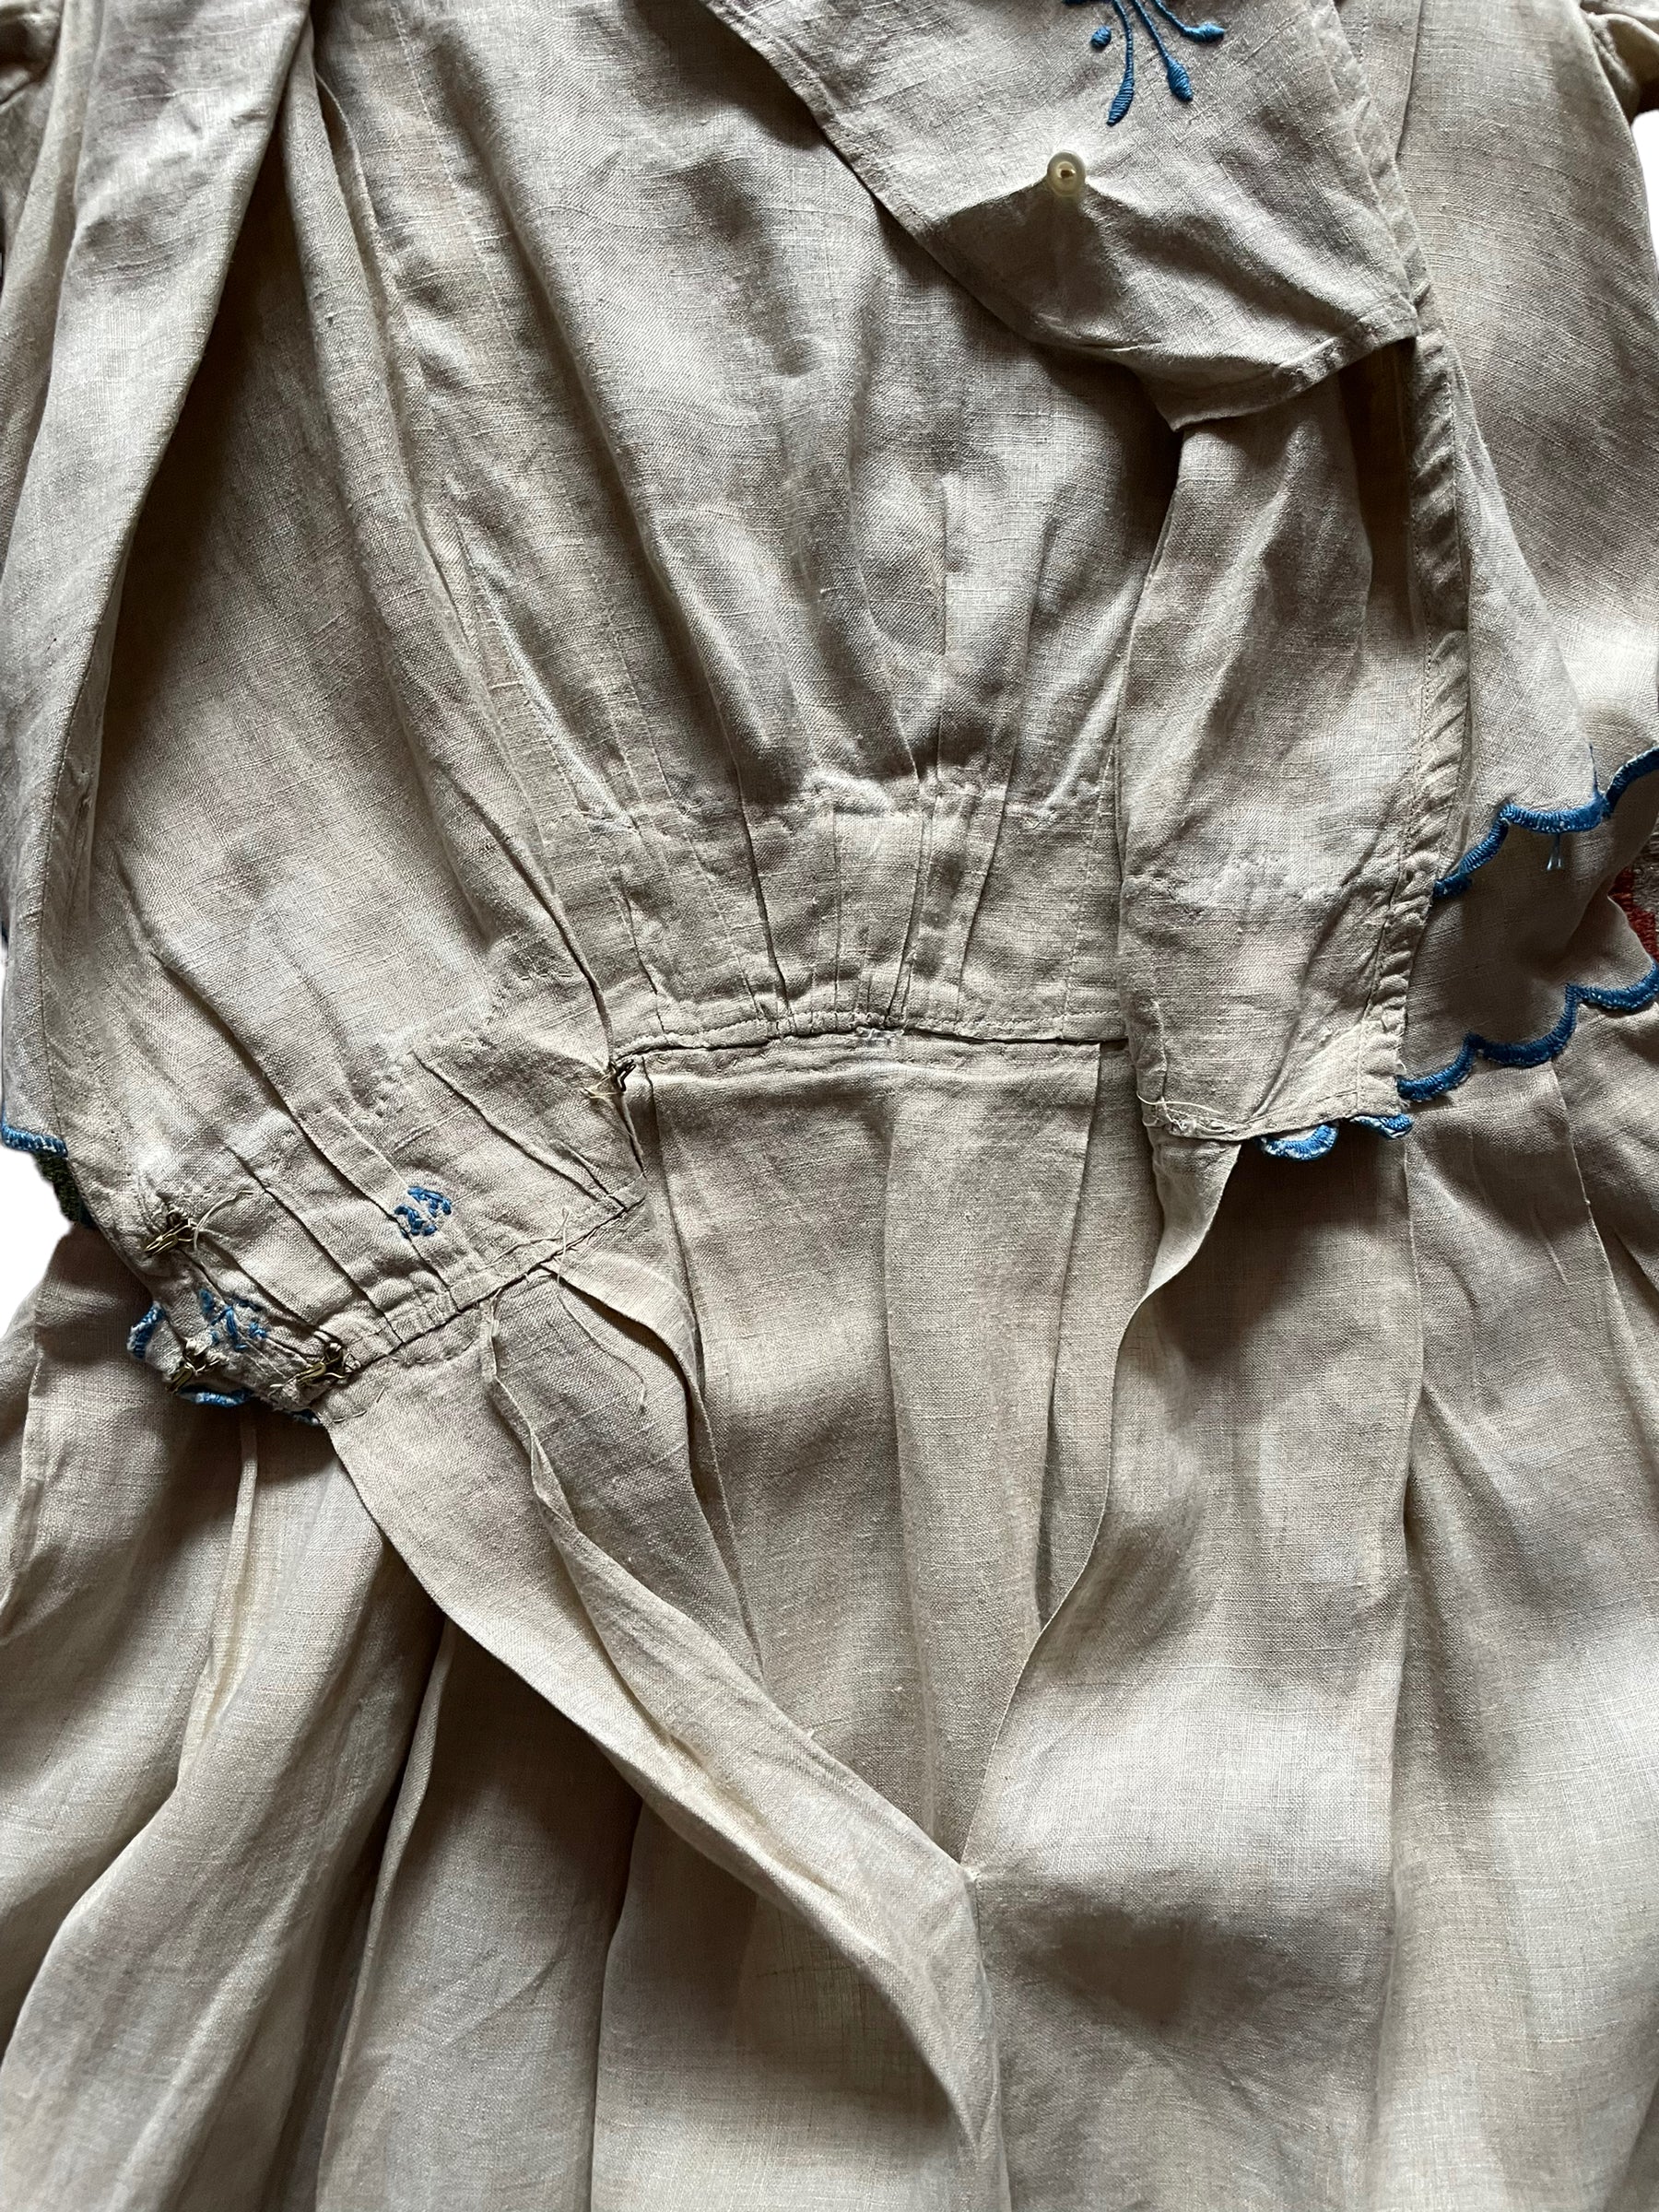 Open frontt view of Antique Early 1900s Linen Dress SZ XS